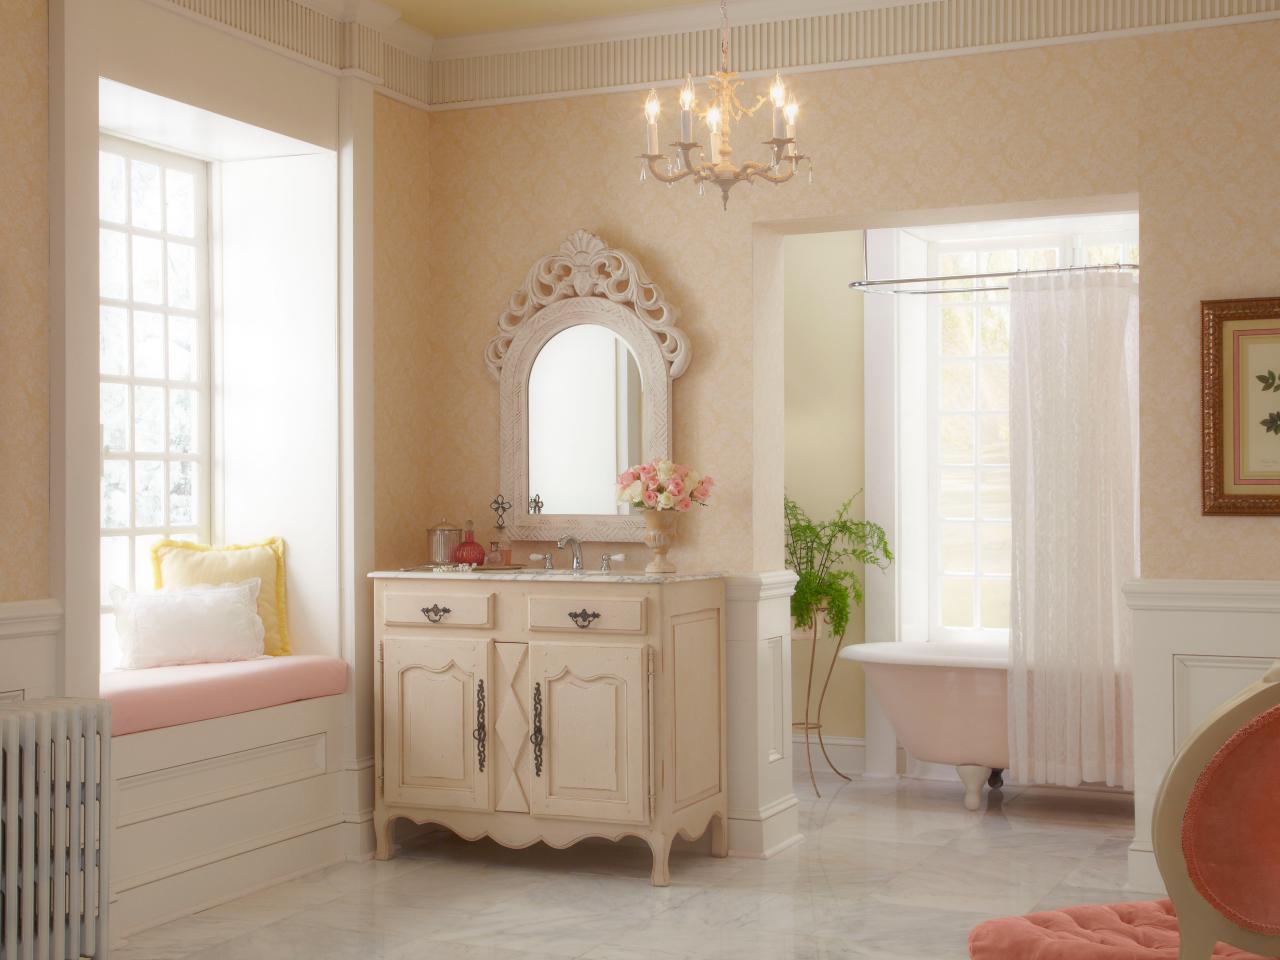 Victorian Bathroom Design Ideas Pictures Tips From Hgtv Hgtv